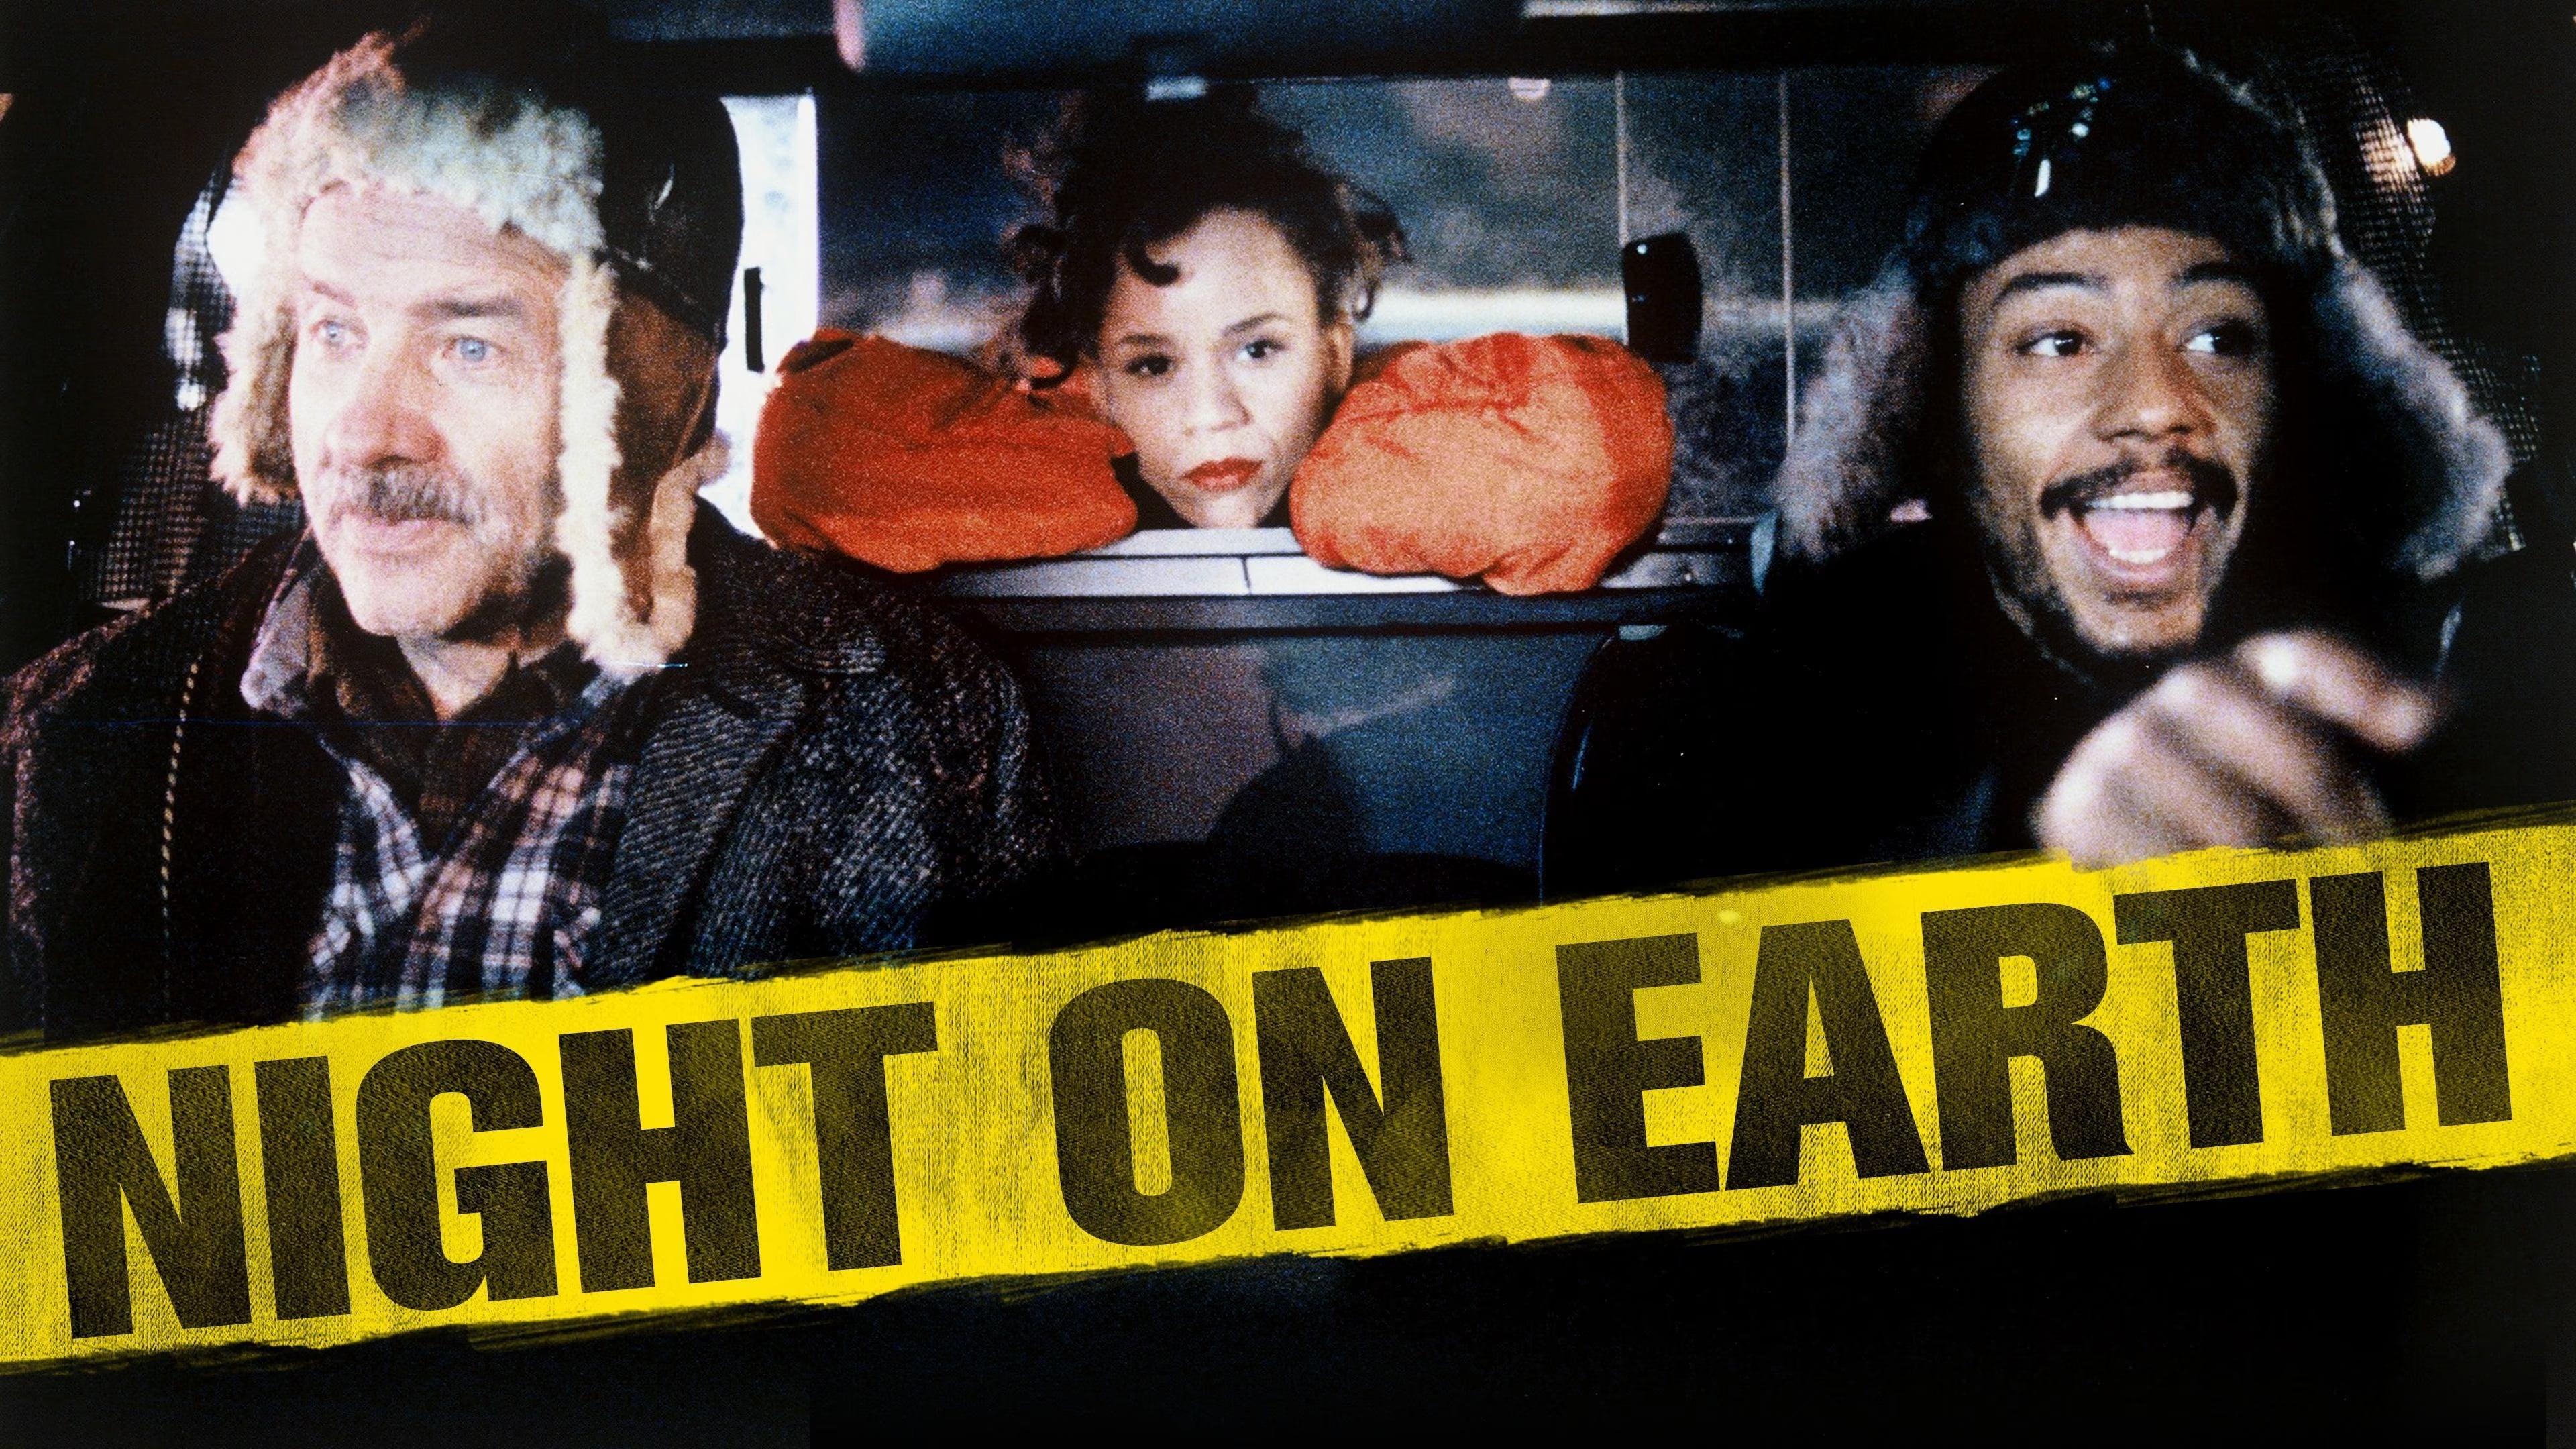 Night on Earth (1991)